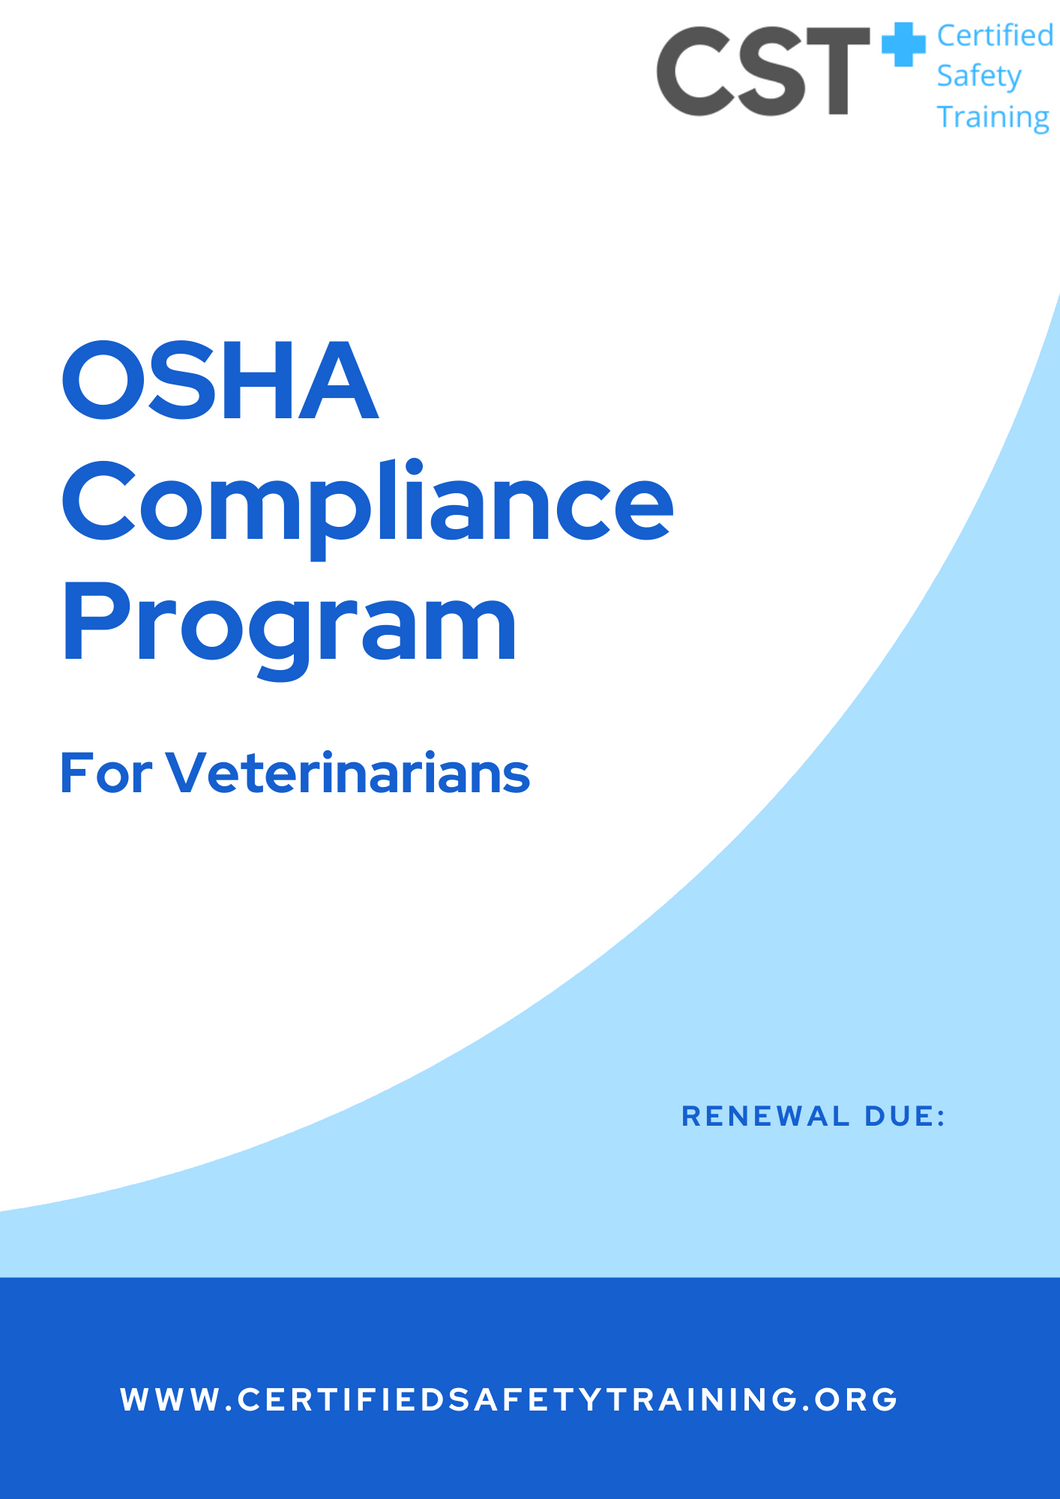 Complete OSHA Compliance for Veterinarians